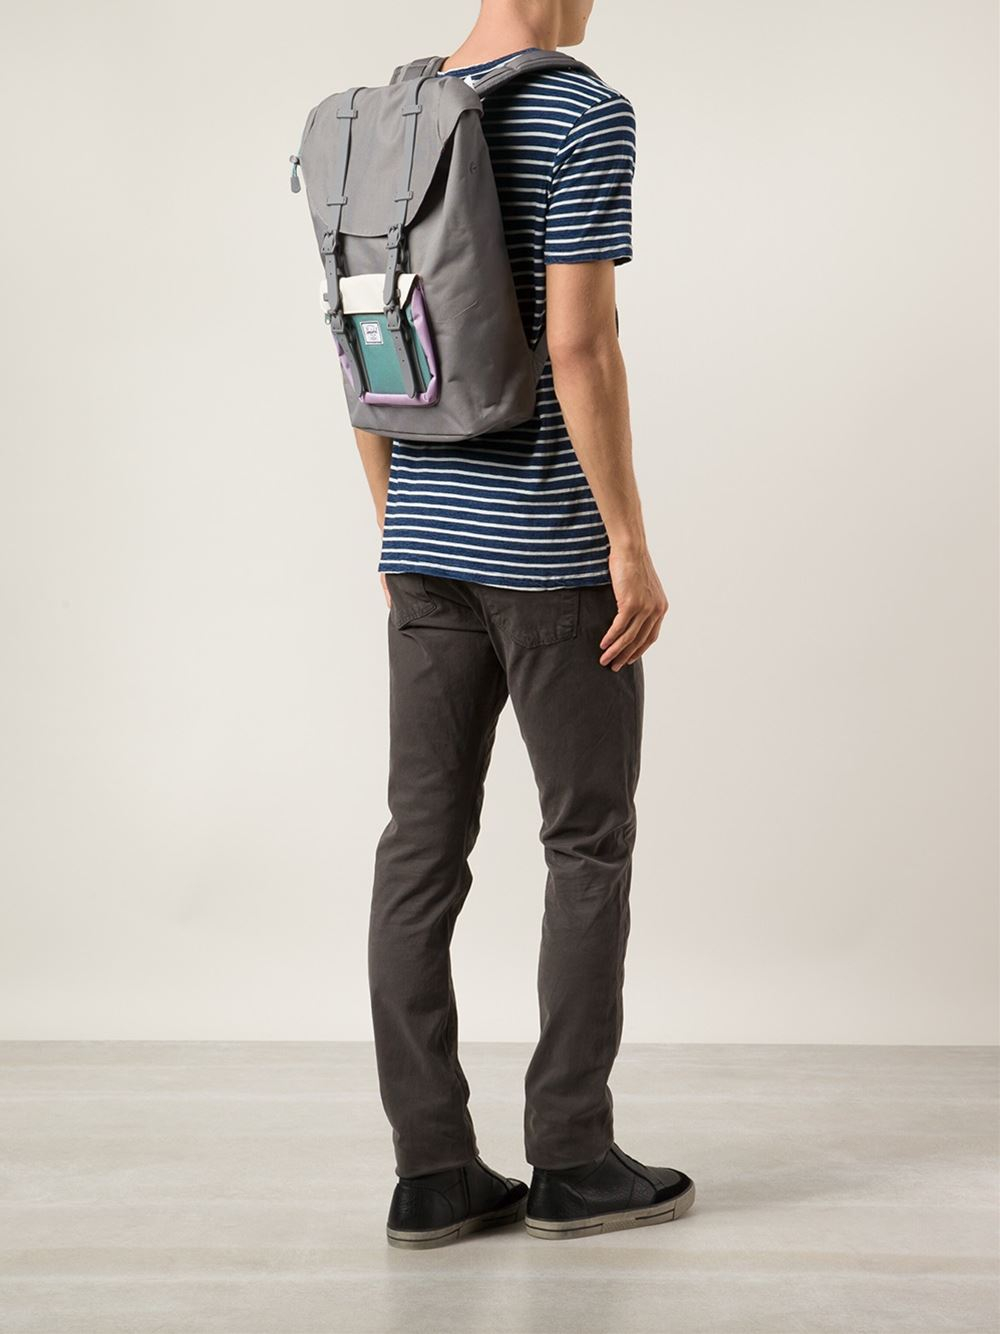 Herschel Supply Co. Little America Midvolume Backpack in Grey (Gray) for  Men - Lyst